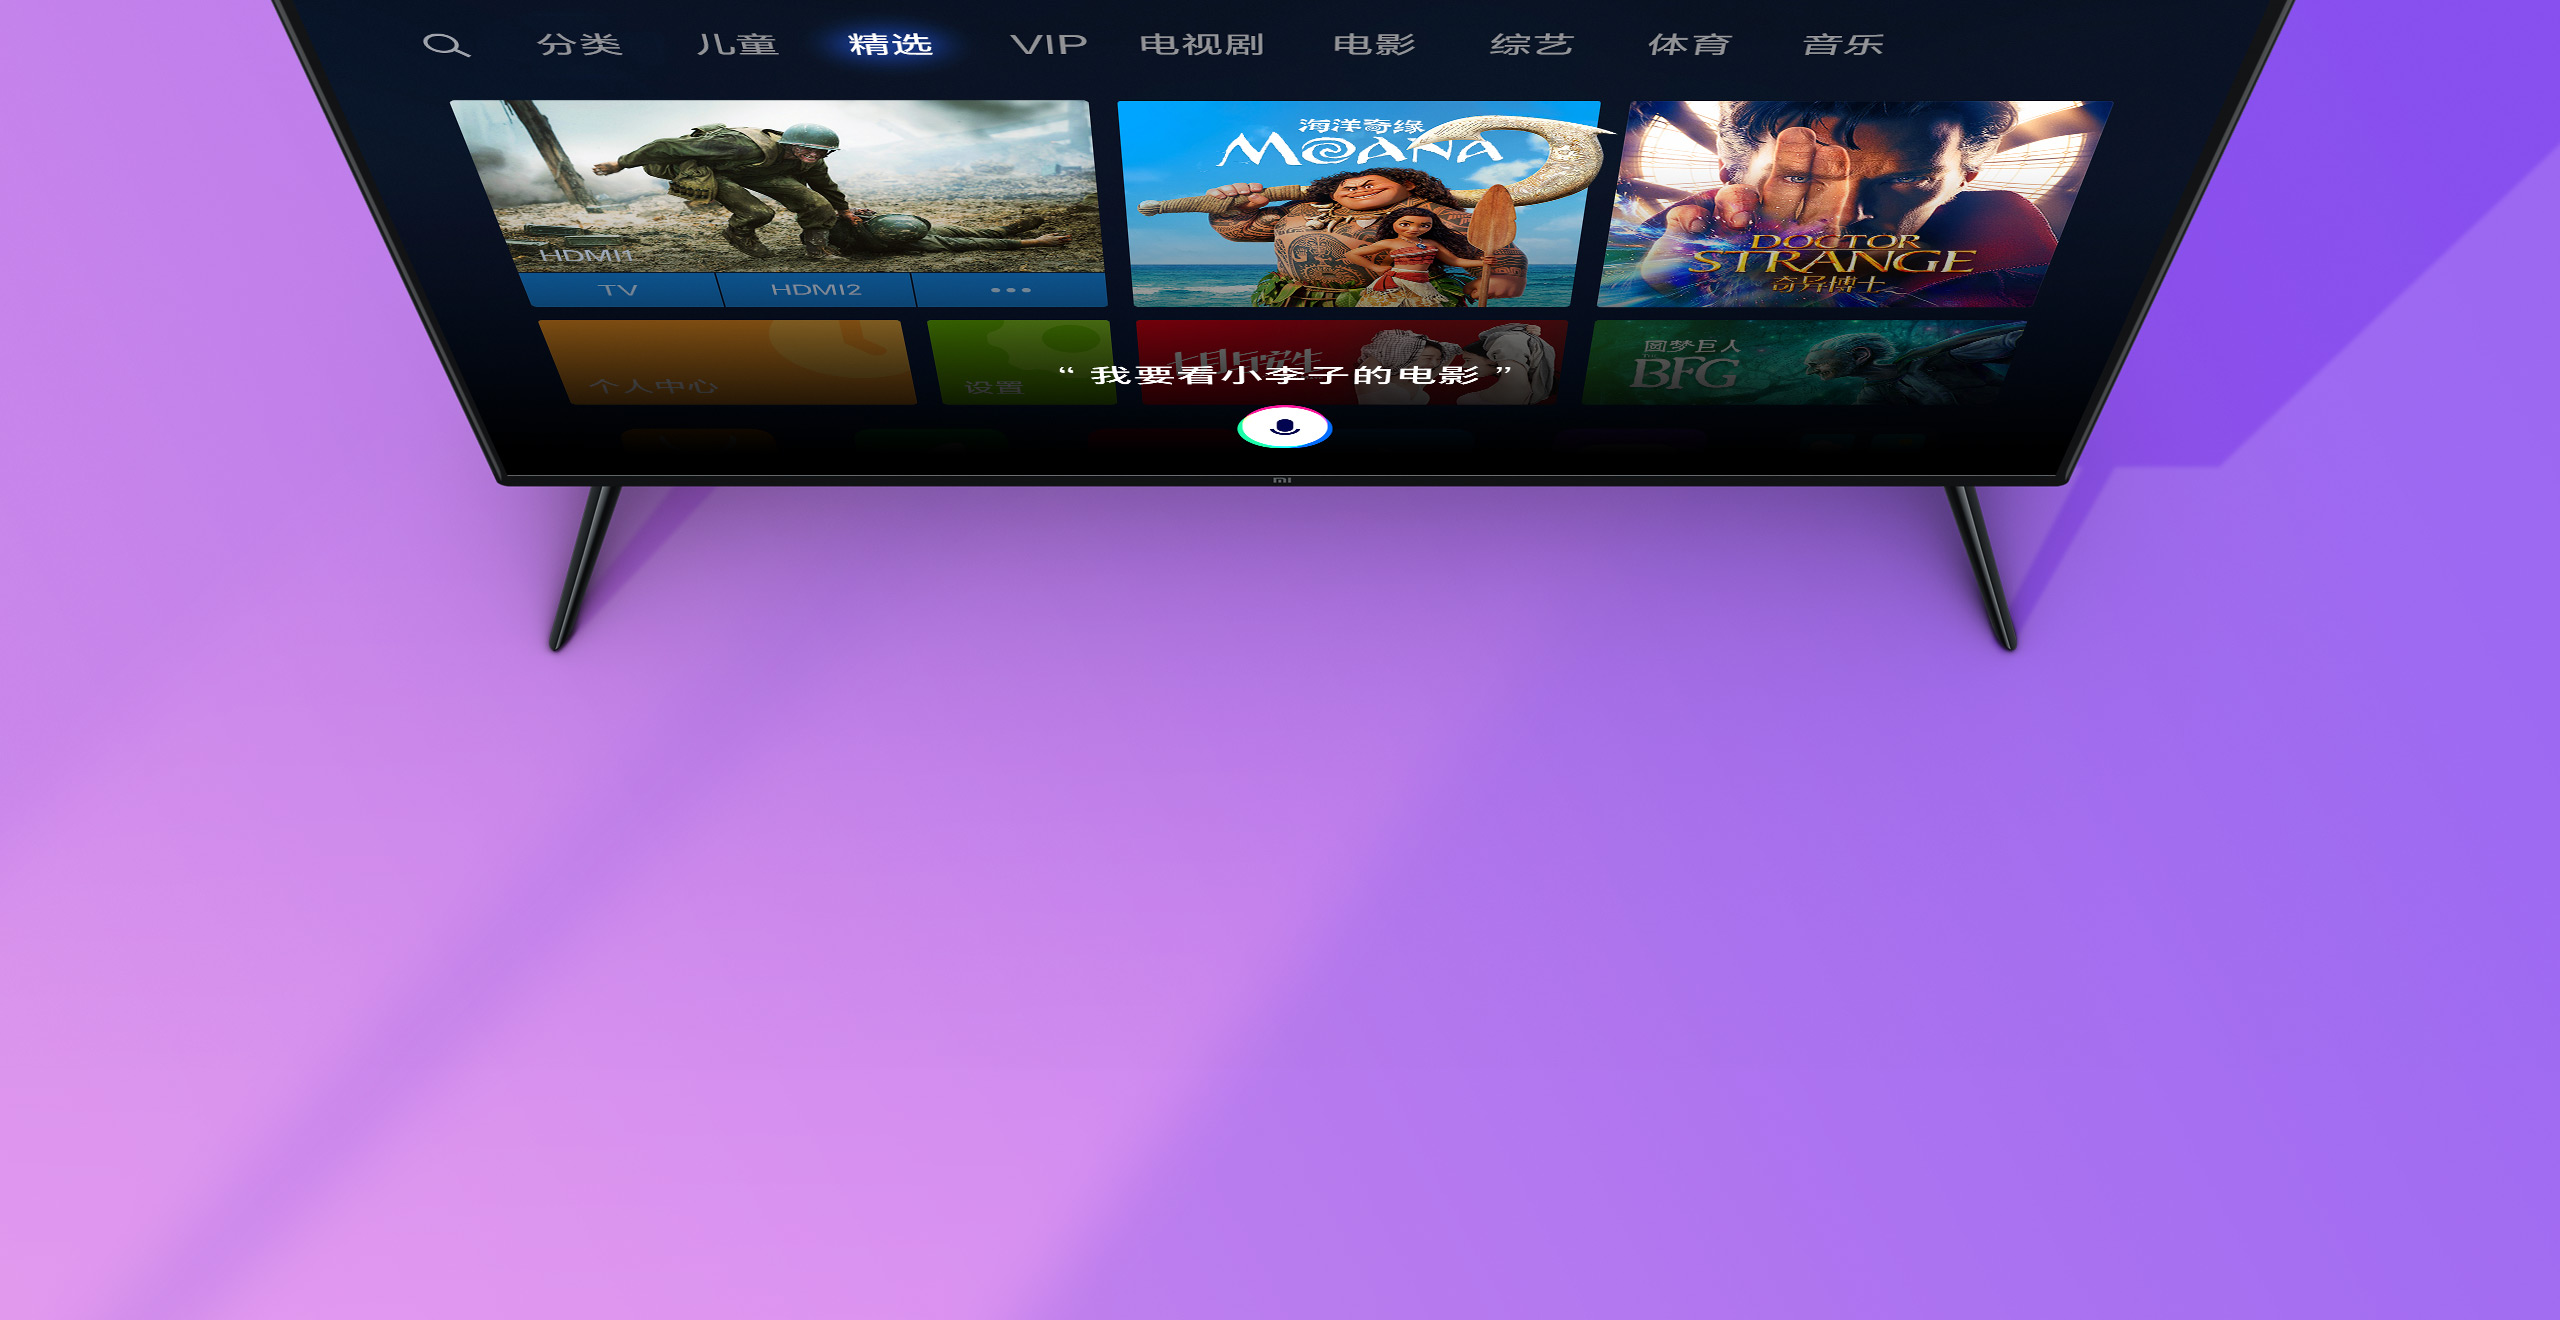 Телевизор Xiaomi Mi Smart 4a